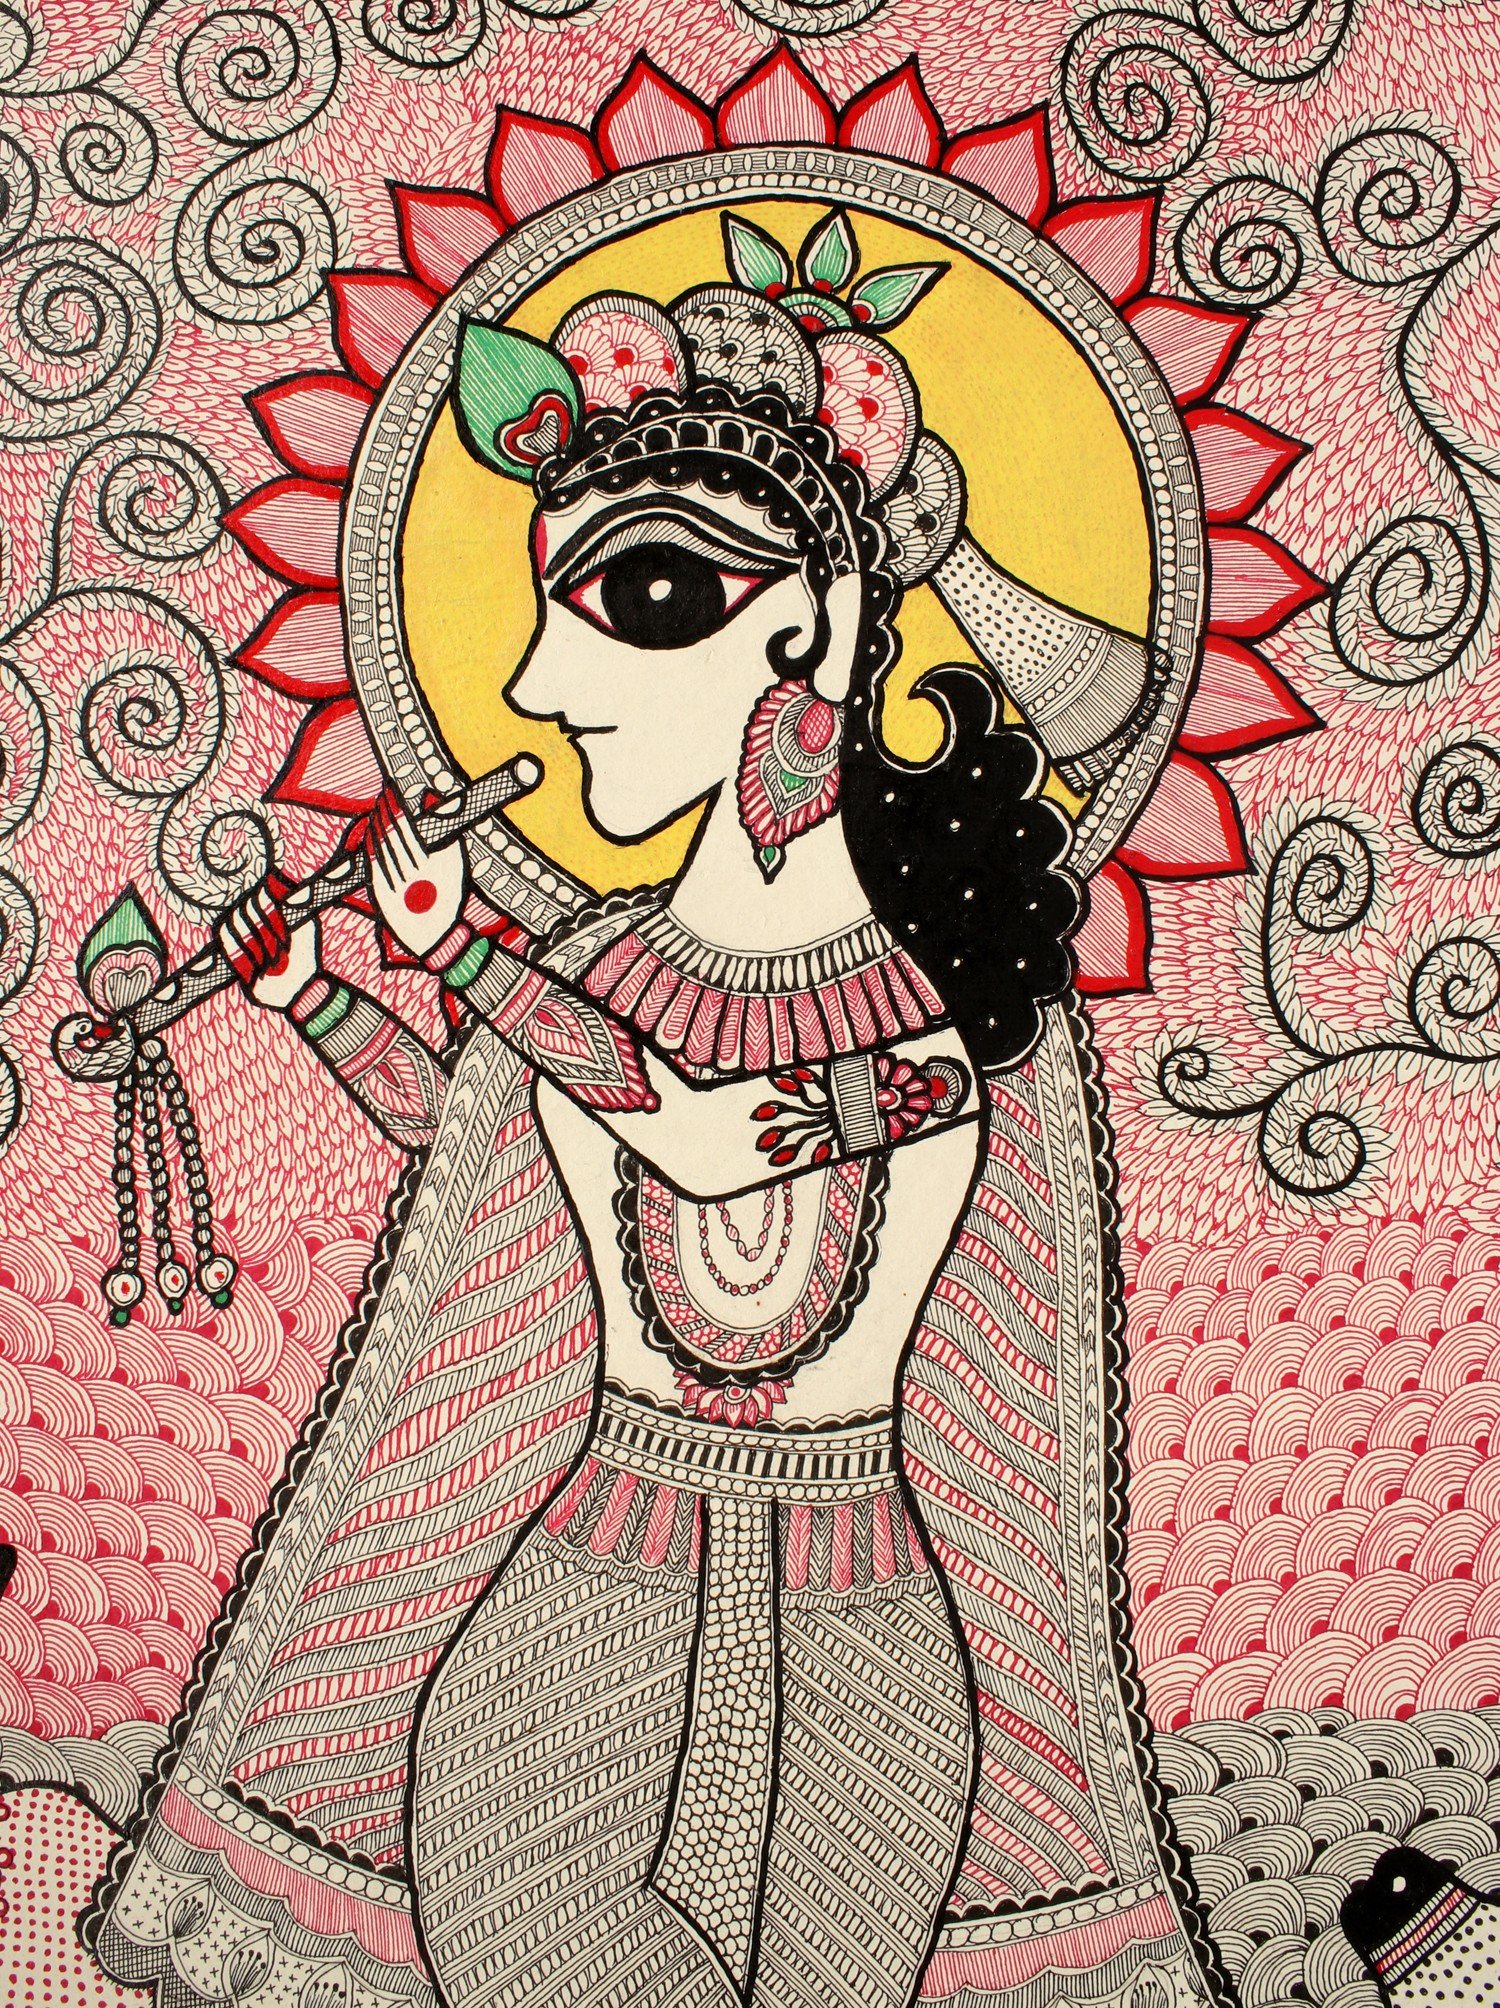 Namaste Home - Canvas Painting - Ghanshyam Girdhari - Lord Shree Krishna -  Religious Art - Modern Art - Canvas Painting (Cotton Canvas, Medeuim Size  28X28 Inches, Multicolor) : Amazon.in: Home & Kitchen